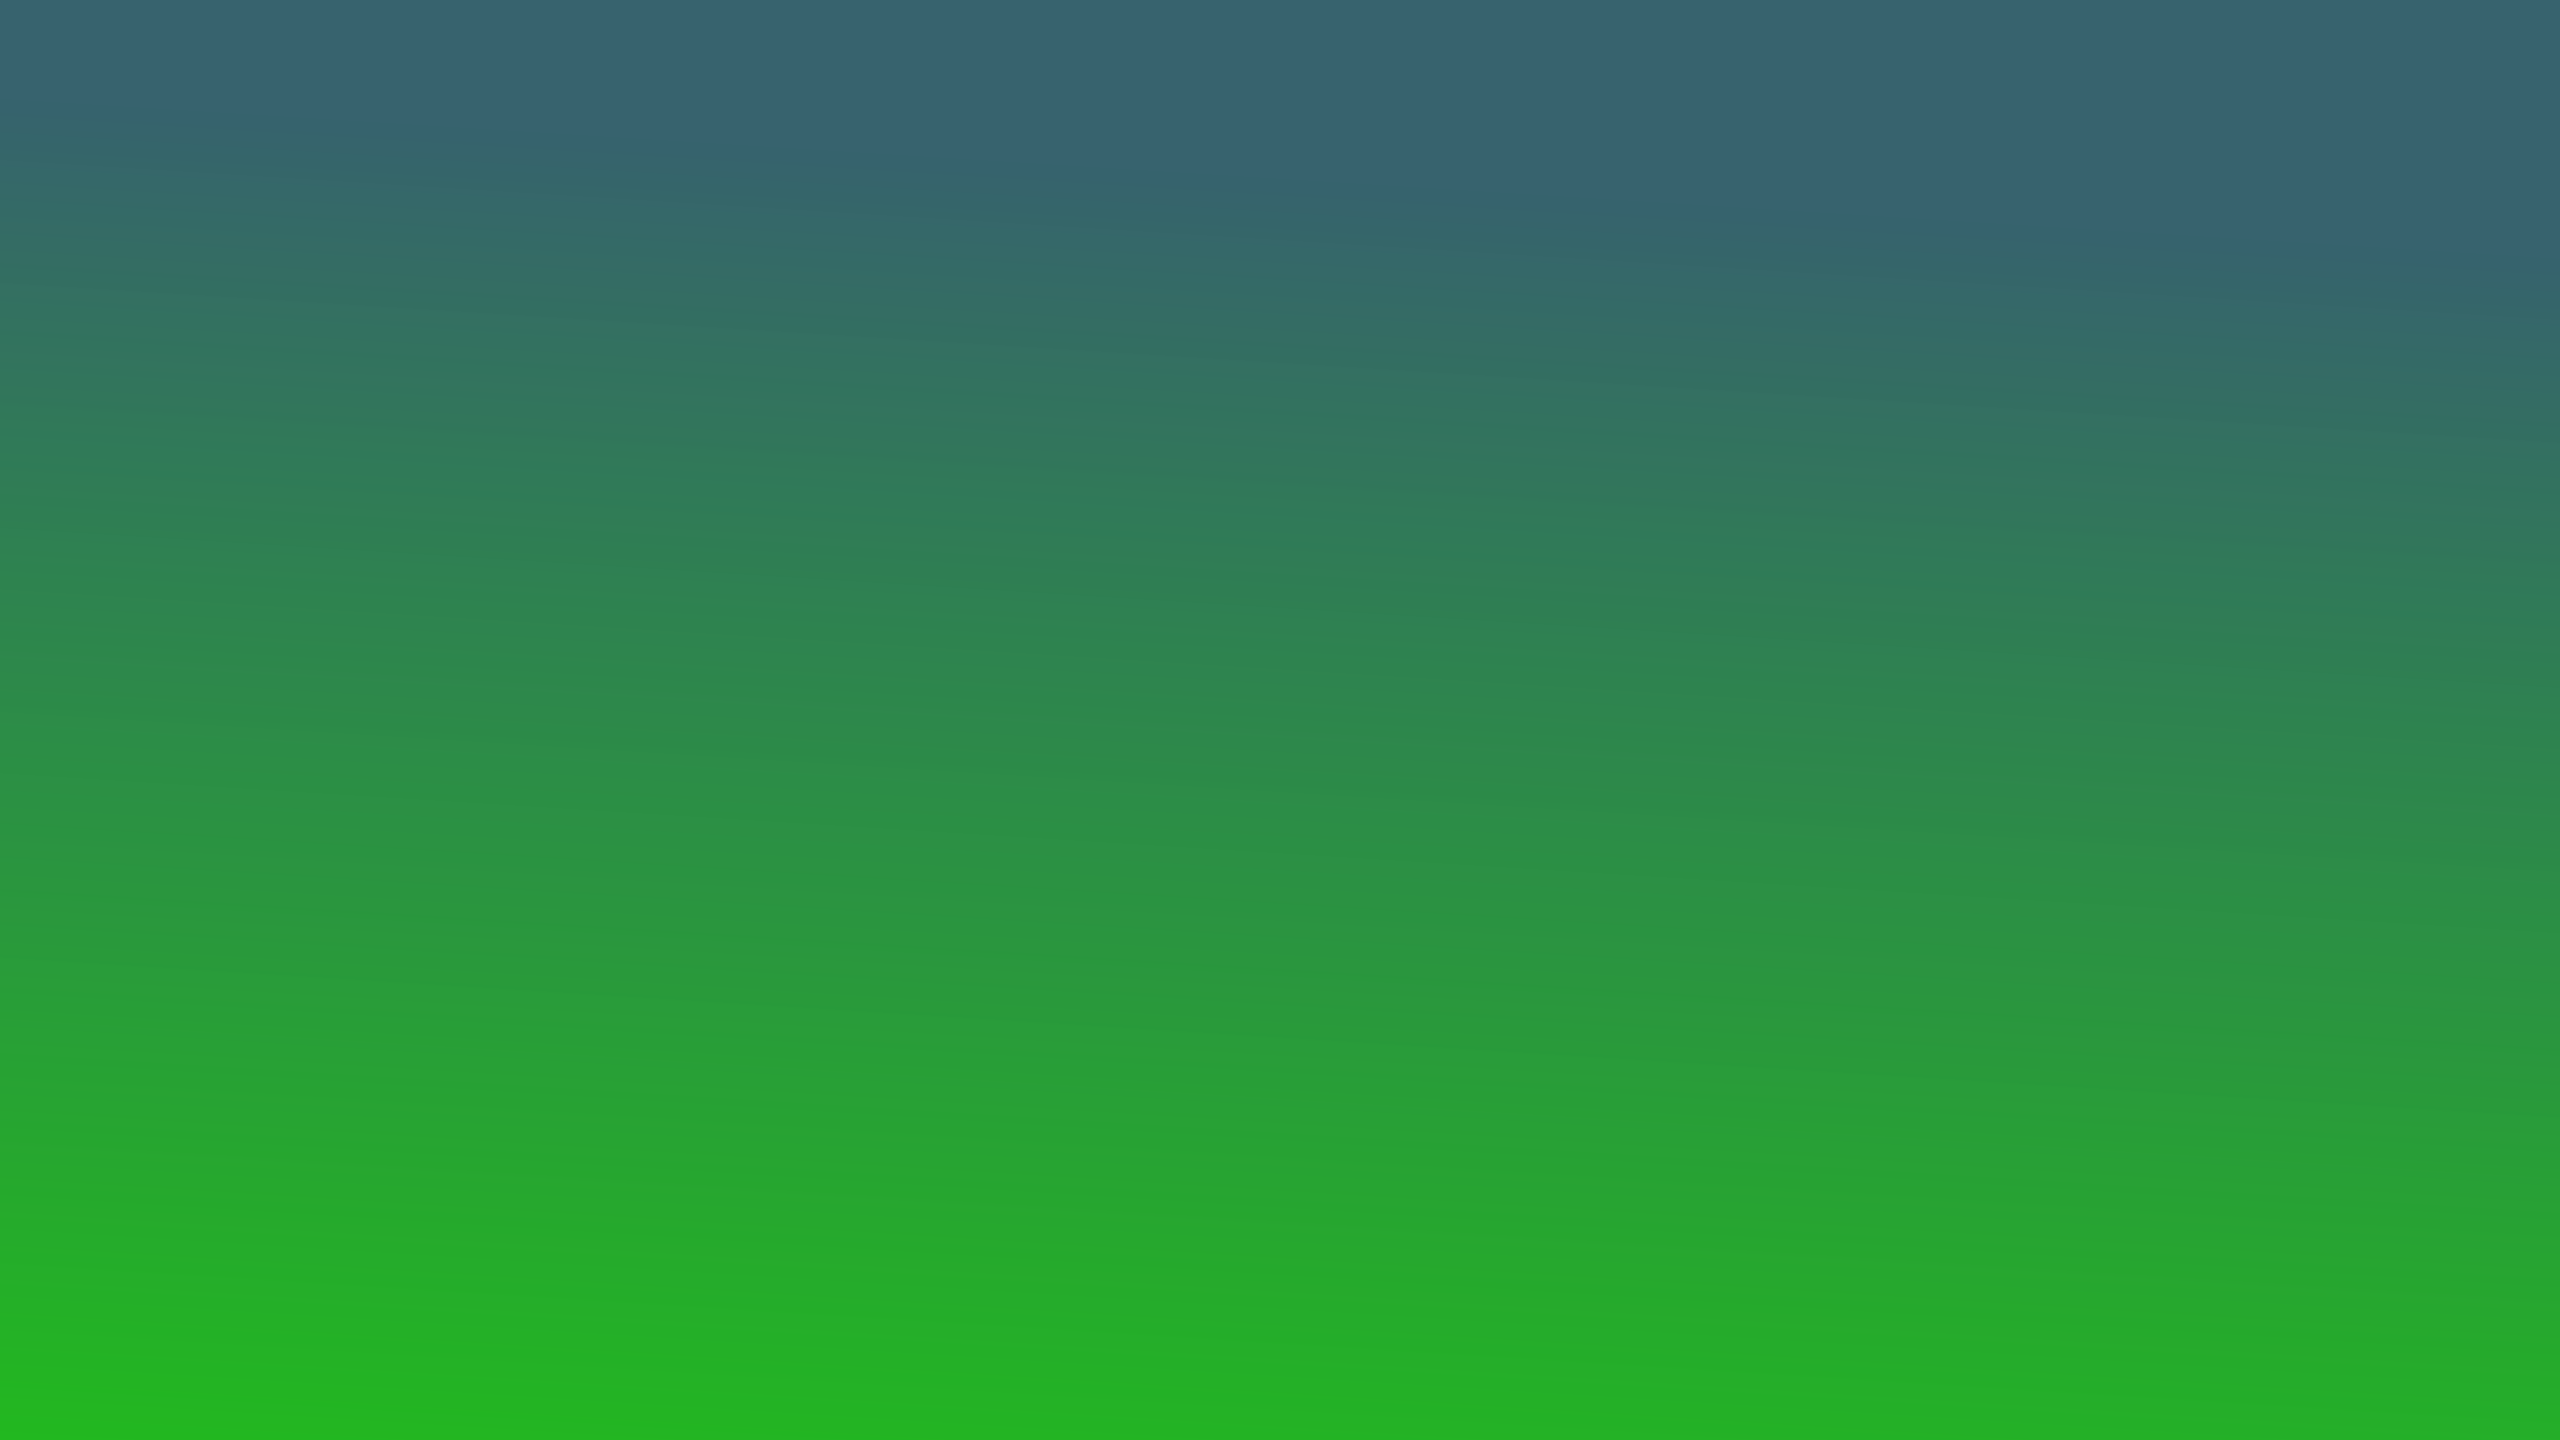 youtubeの壁紙,緑,青い,ターコイズ,アクア,草